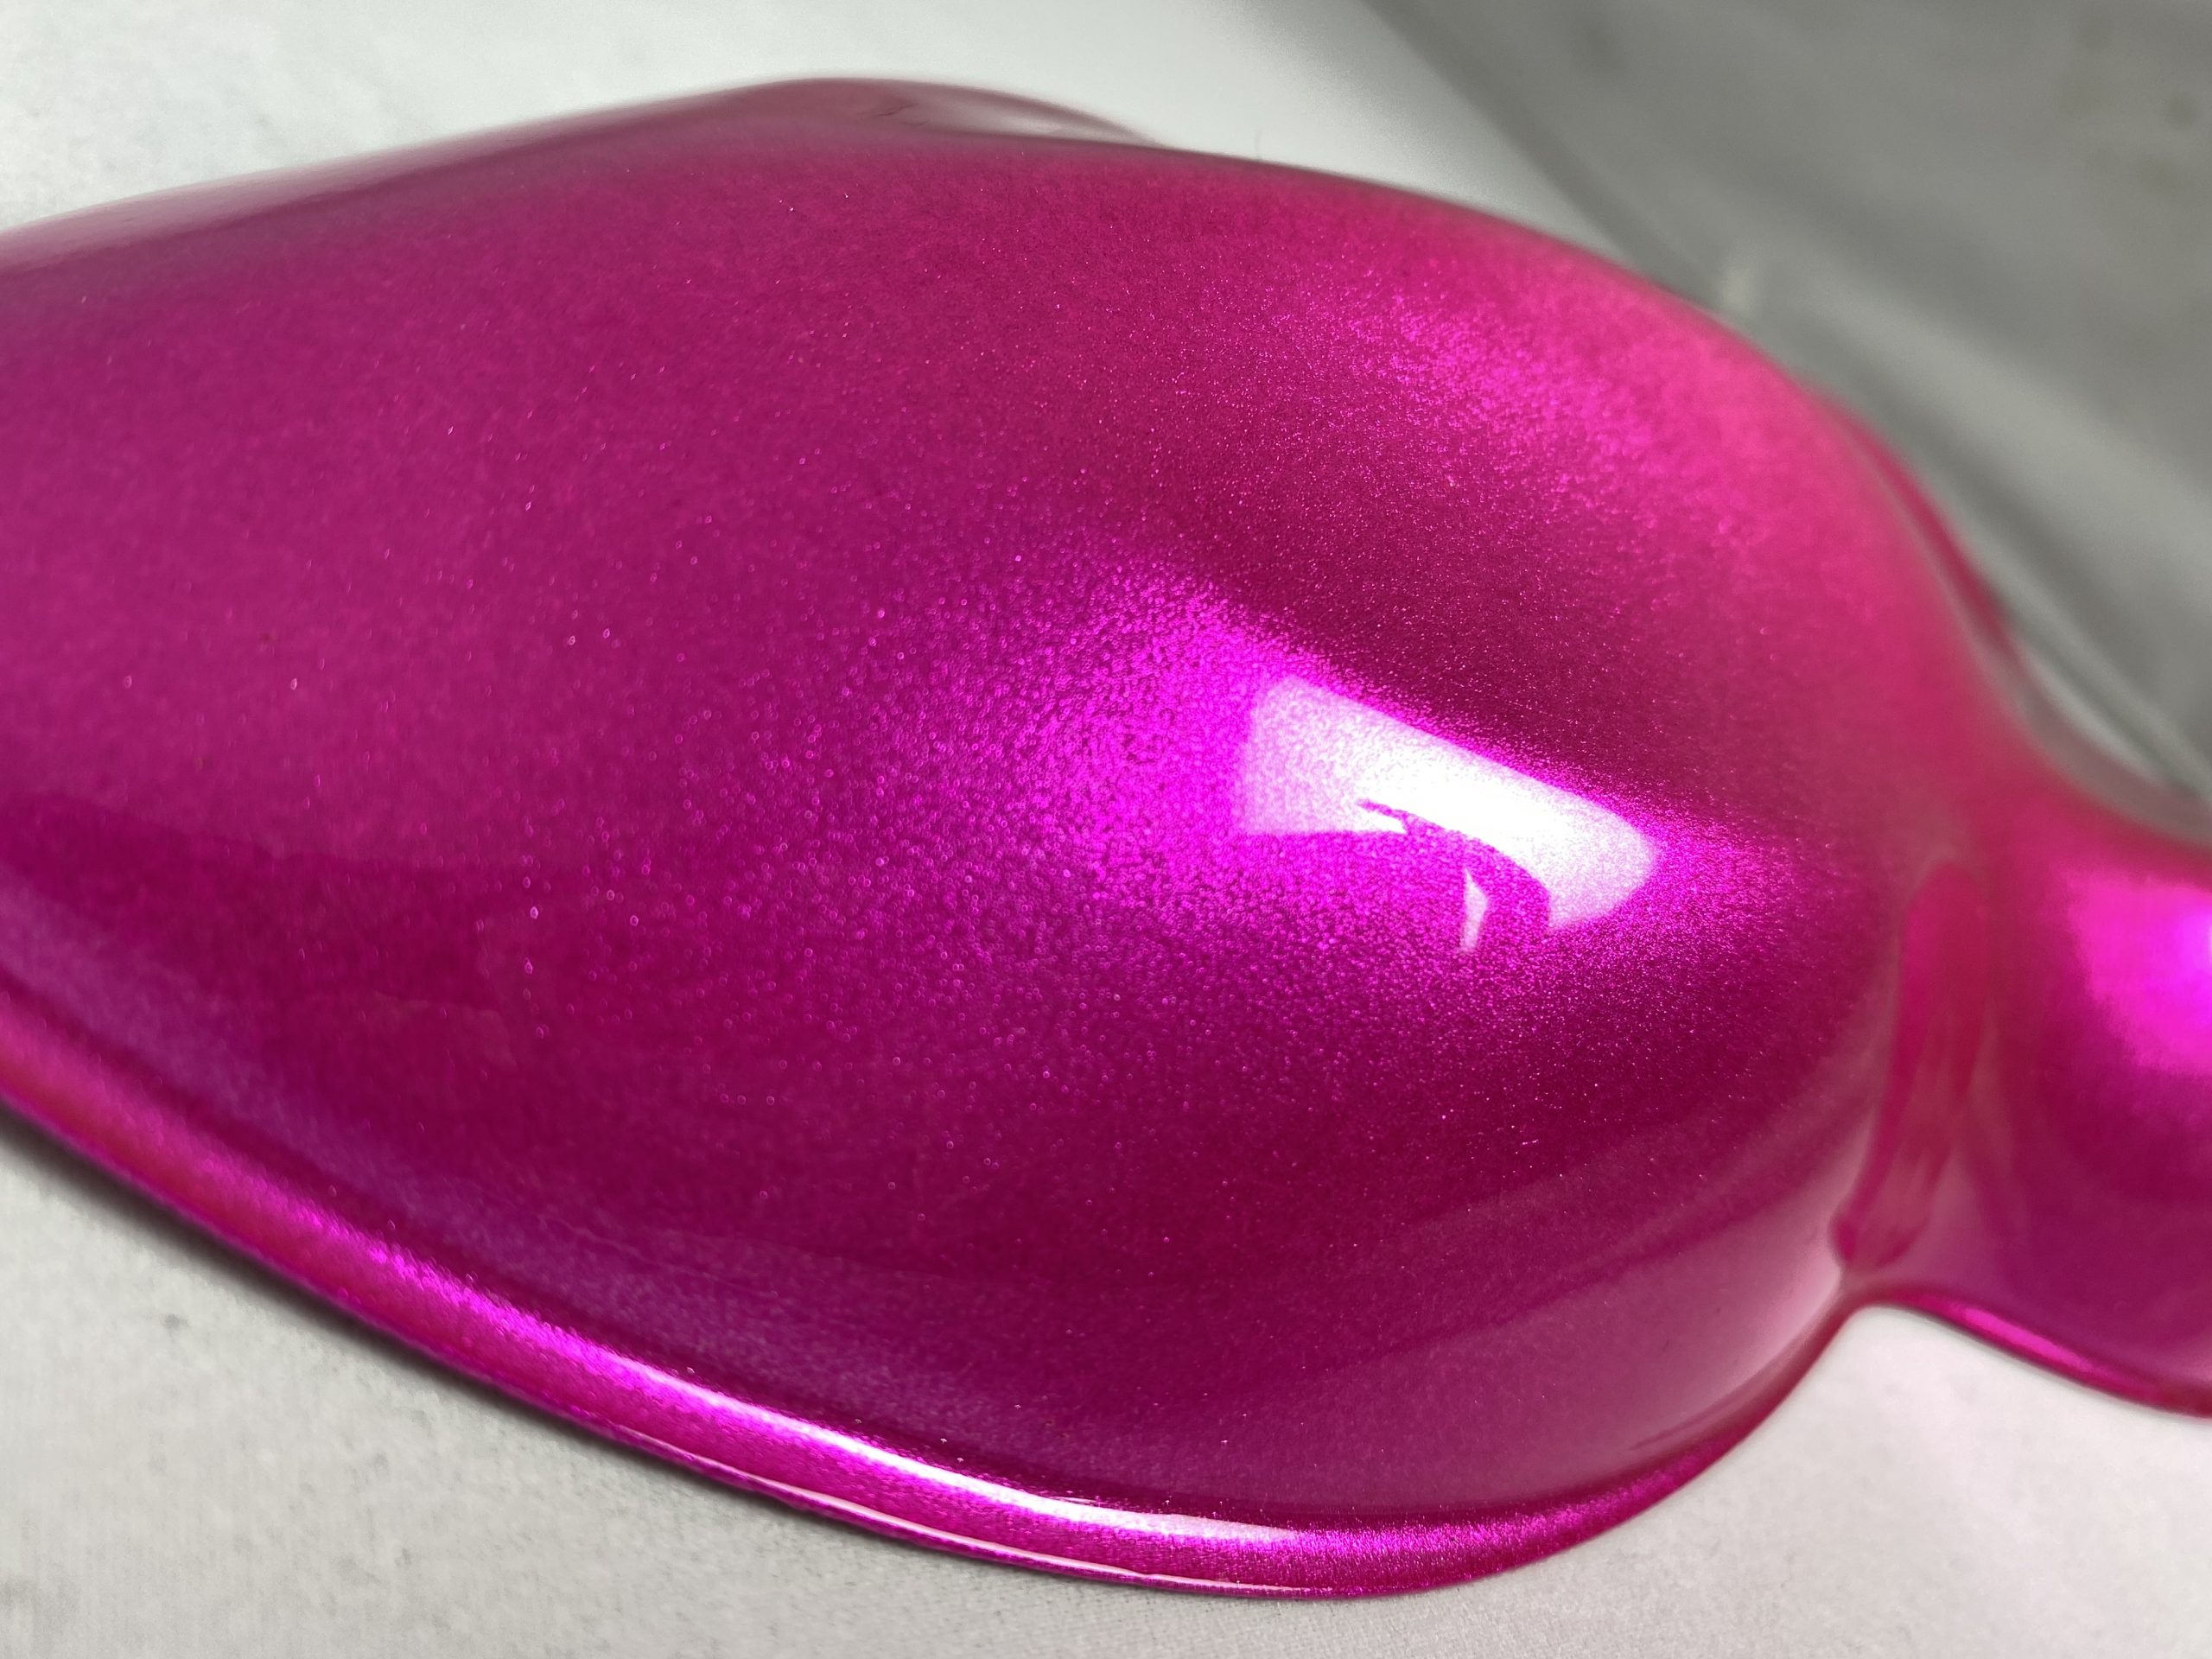 Lightest Pink Paint Hot Sales, Save 59% | jlcatj.gob.mx